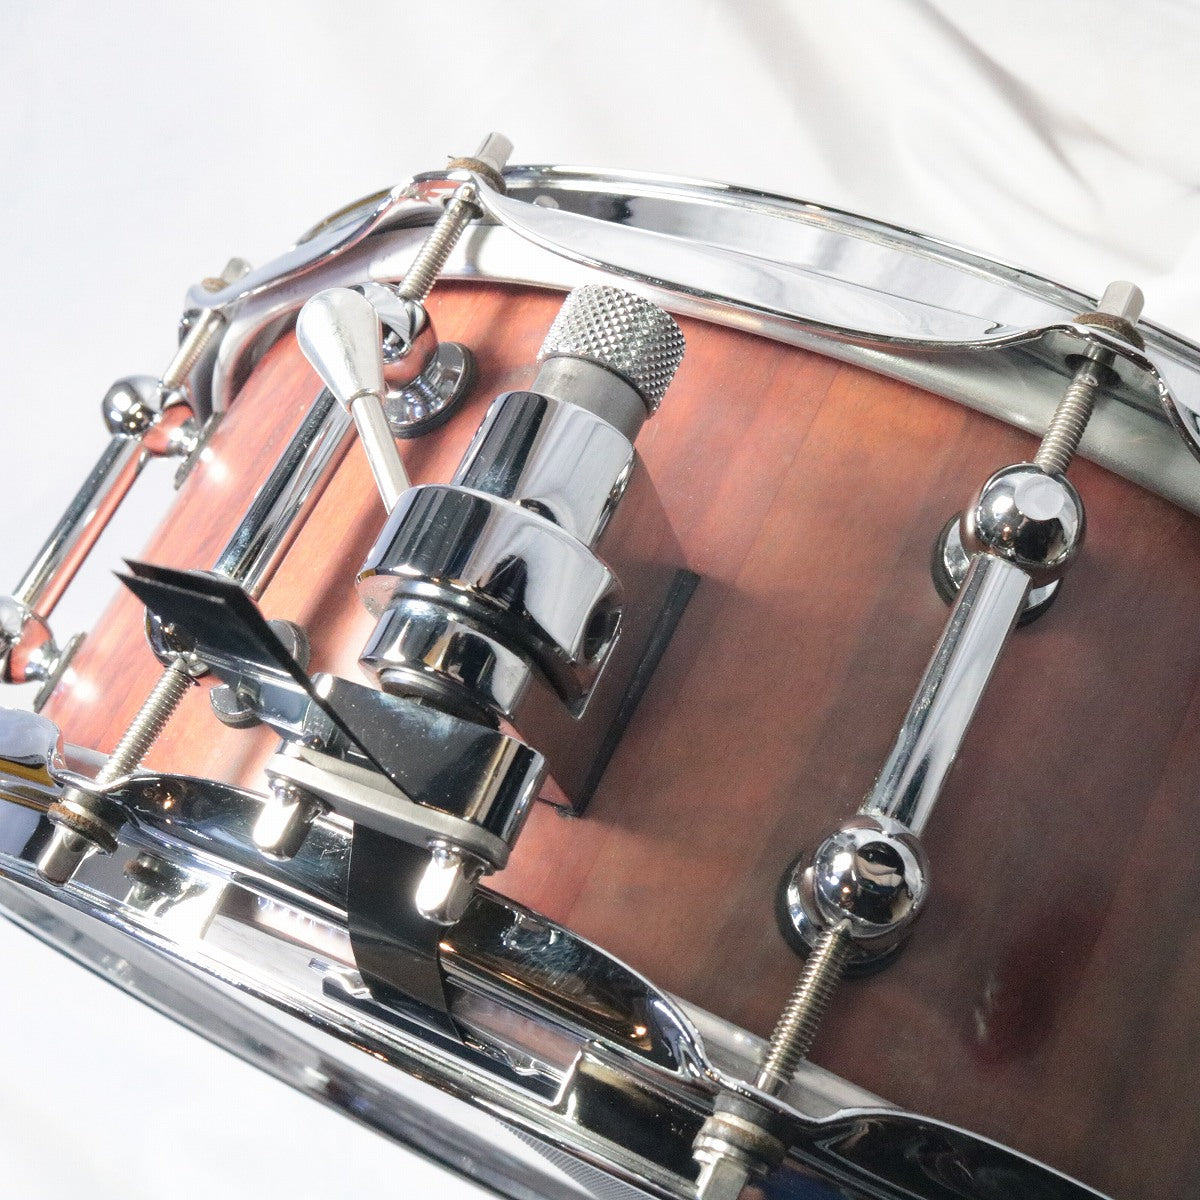 USED BRADY / JARRAH BLOCK SNARE DRUM 14x5.5 Brady Snare Drum [08]